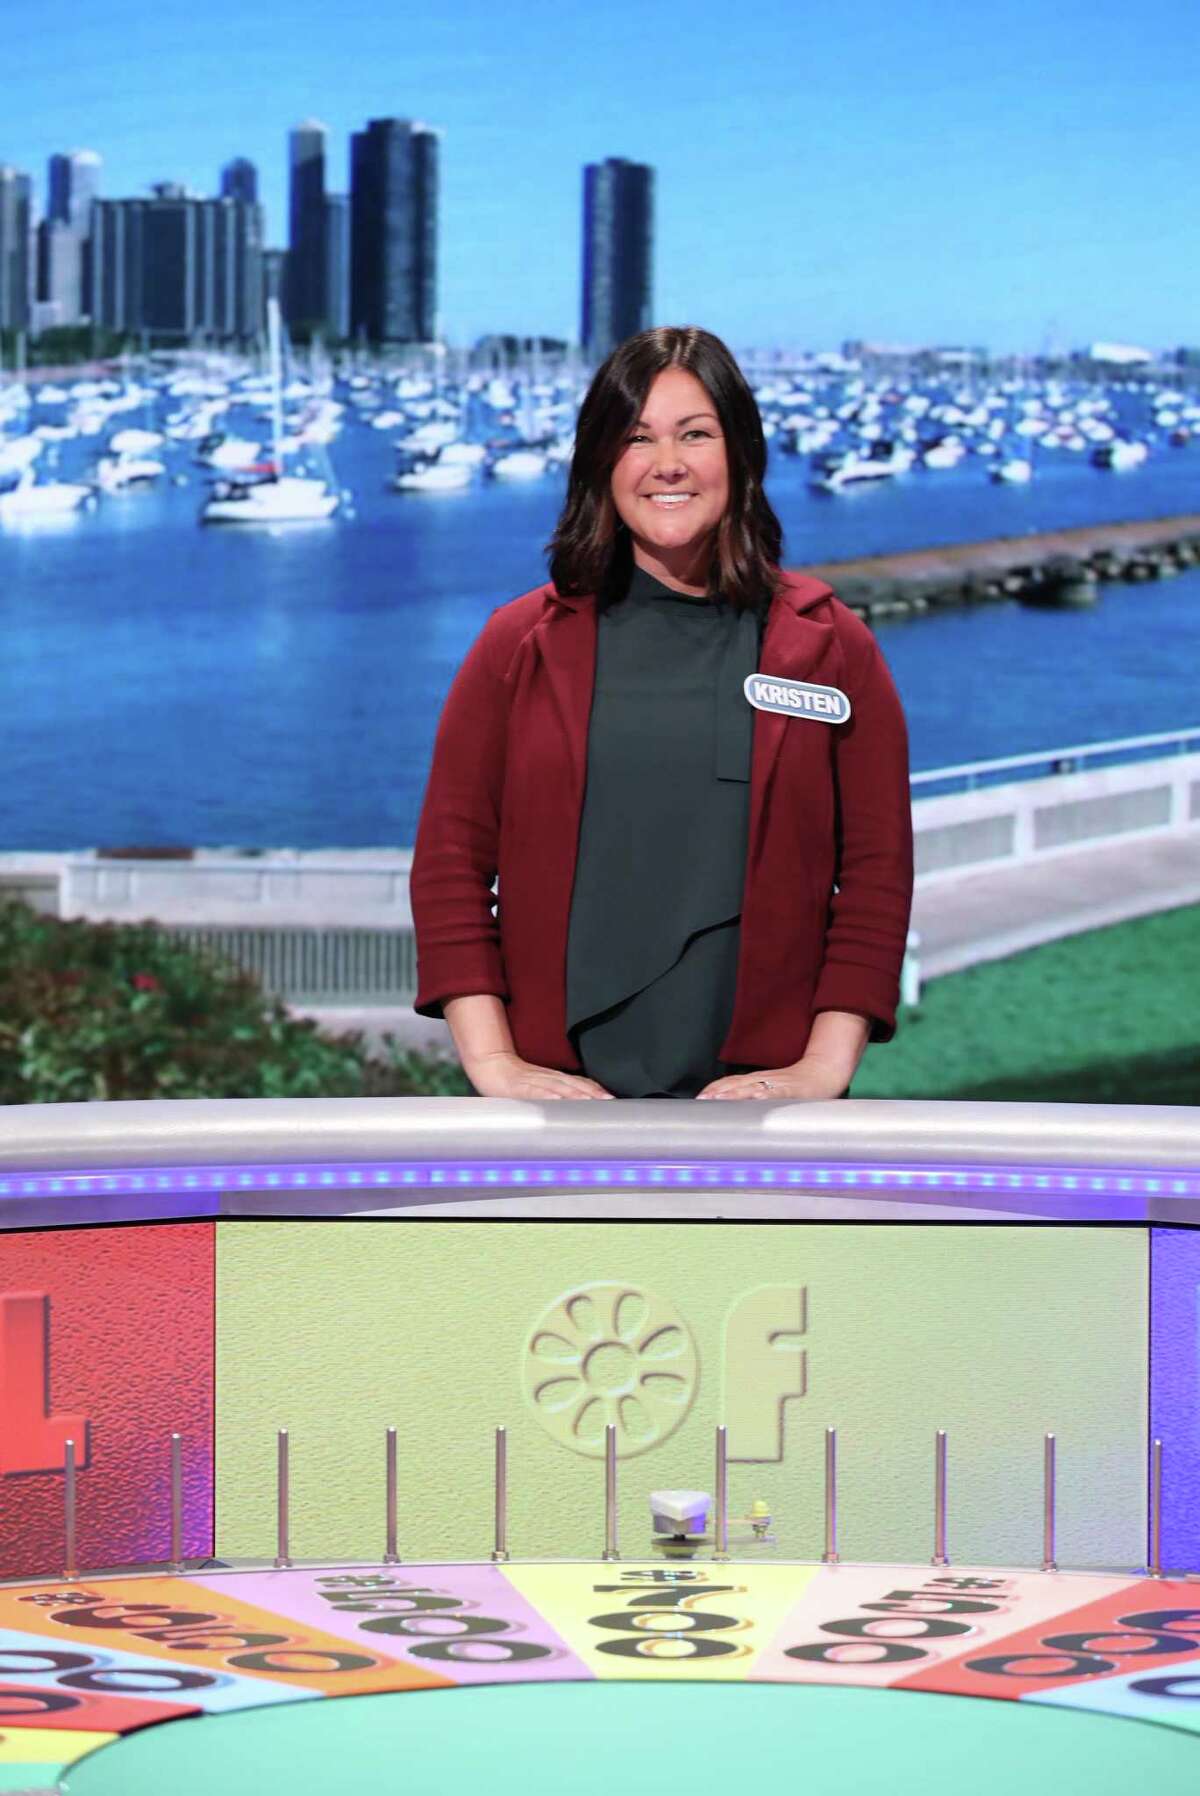 Elizabeth Shelton School first grade teacher Kristen Zack on the set of Wheel of Fortune. She appeared on the ABC show Tuesday, Nov. 16.